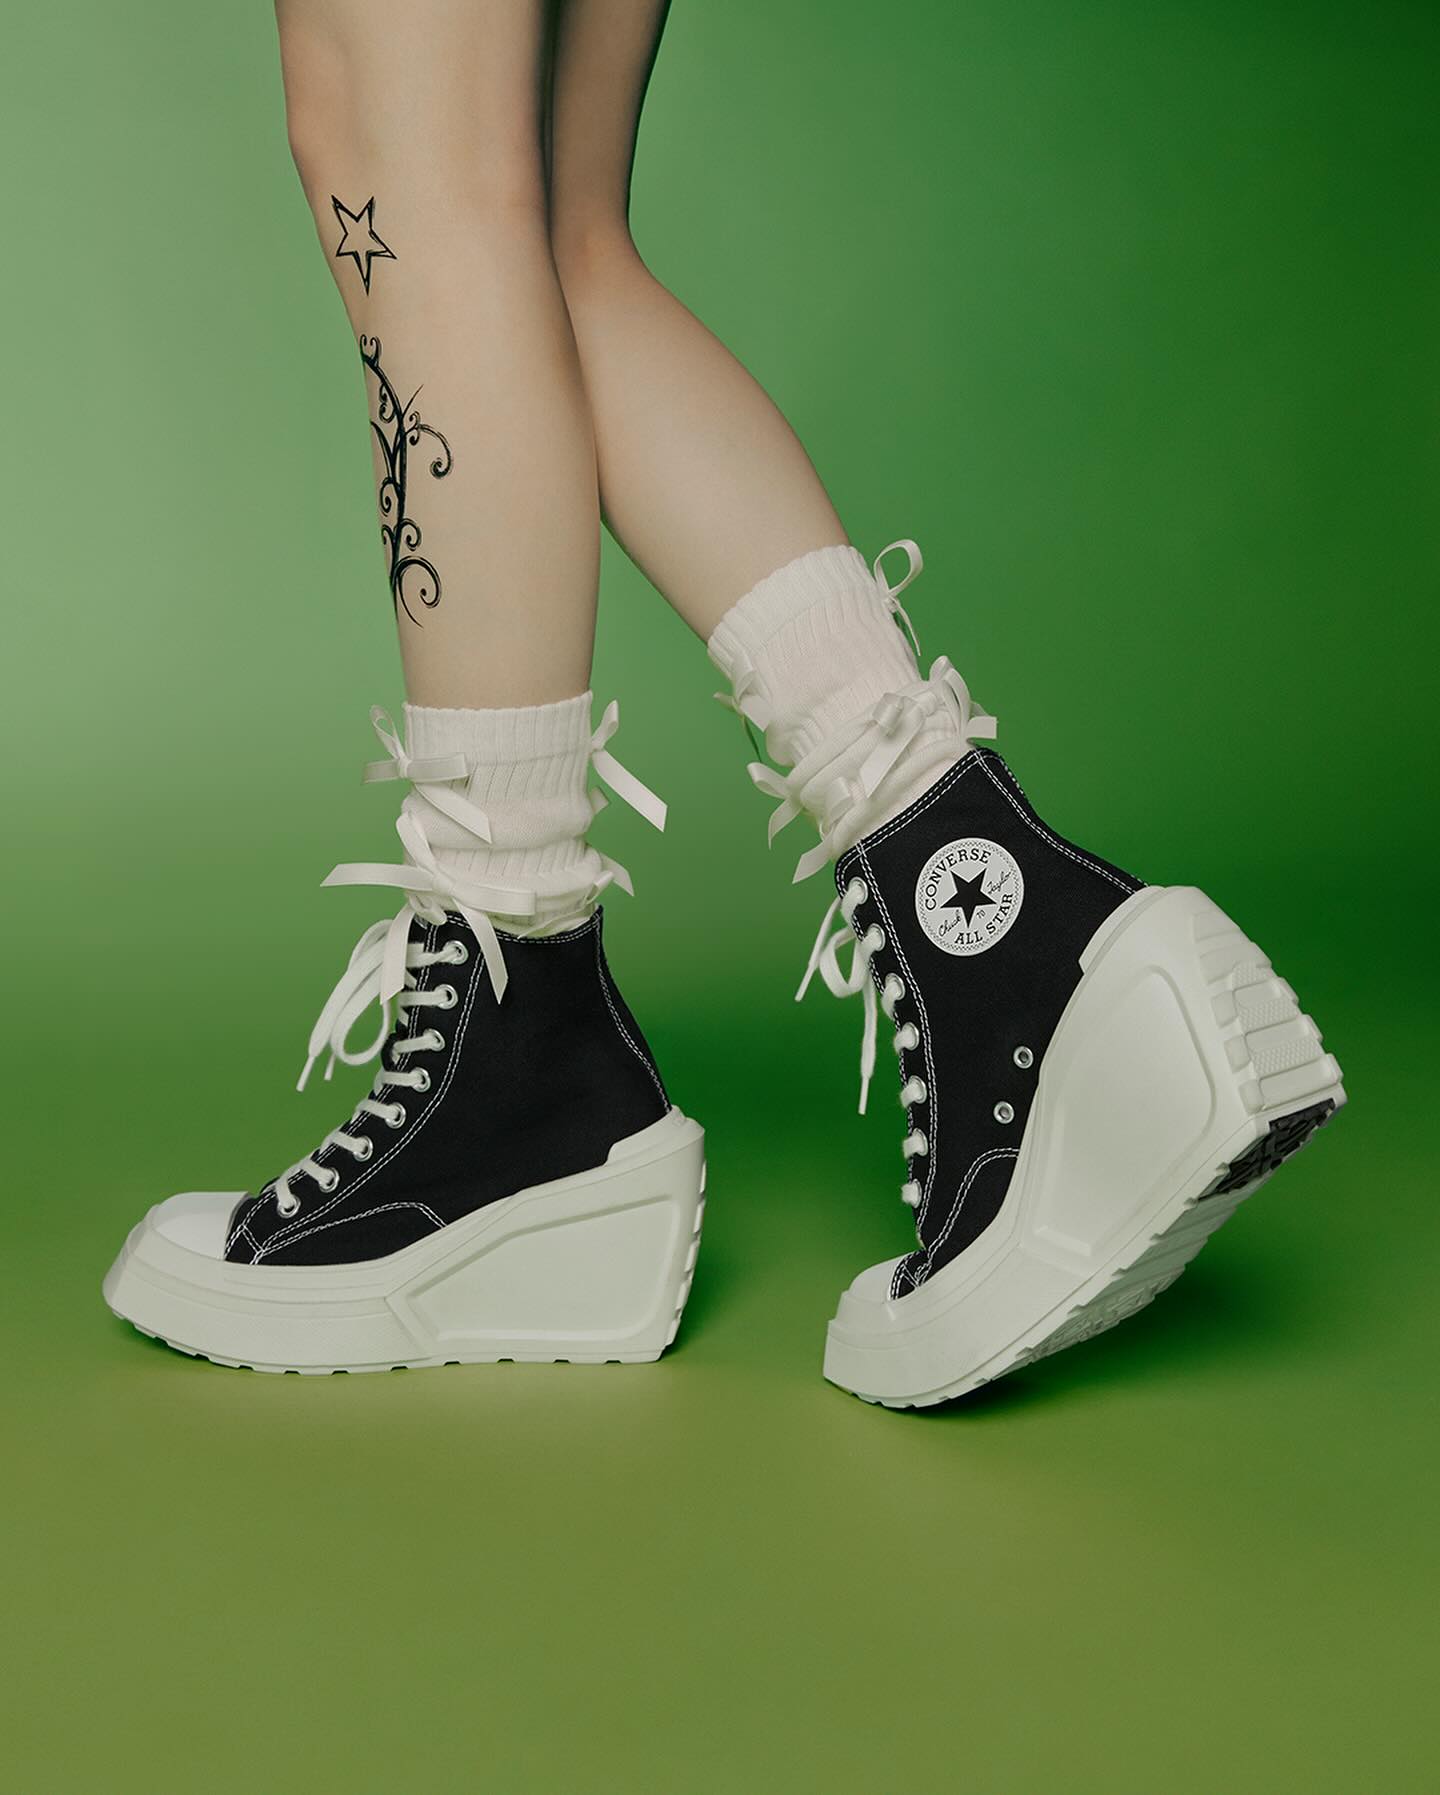 Converse's de luxe wedge heel sneaker in black and white worn by AESPA member Karina